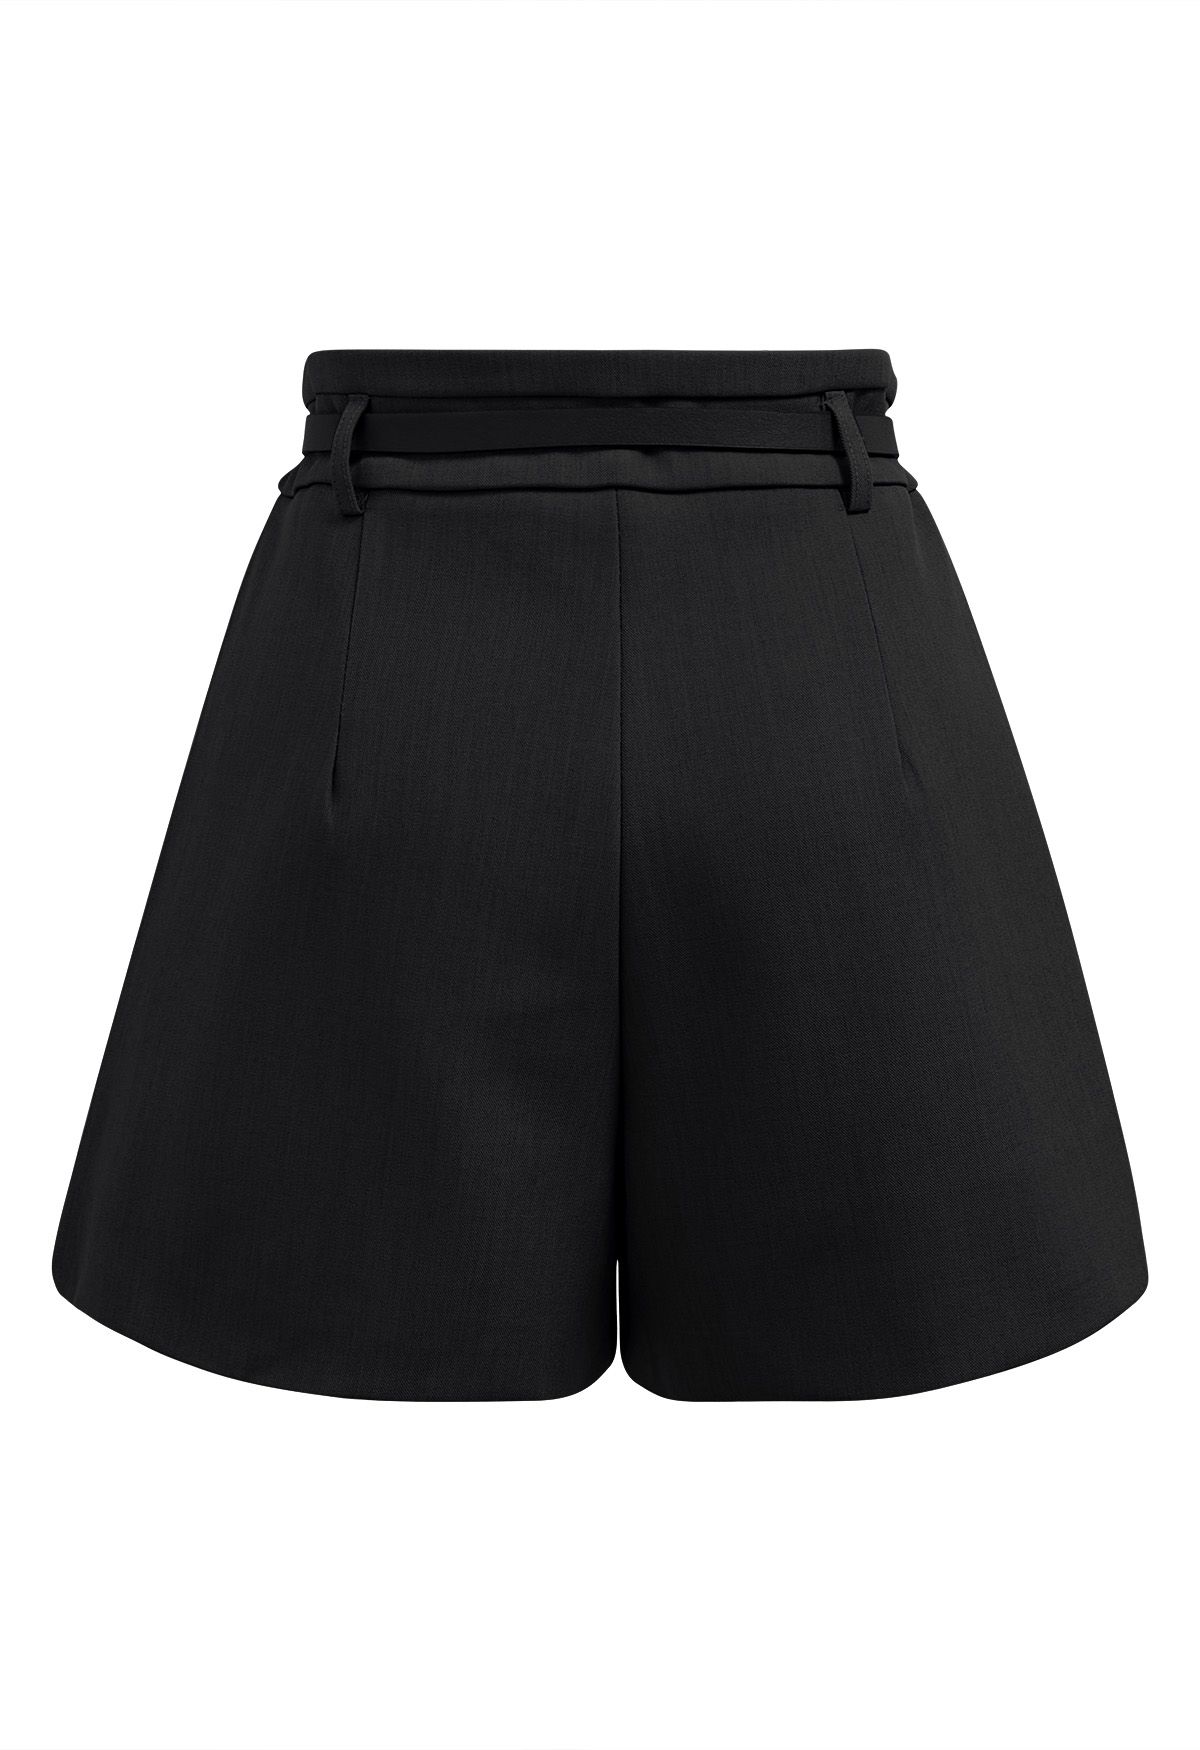 Solid Color Belted Shorts in Black